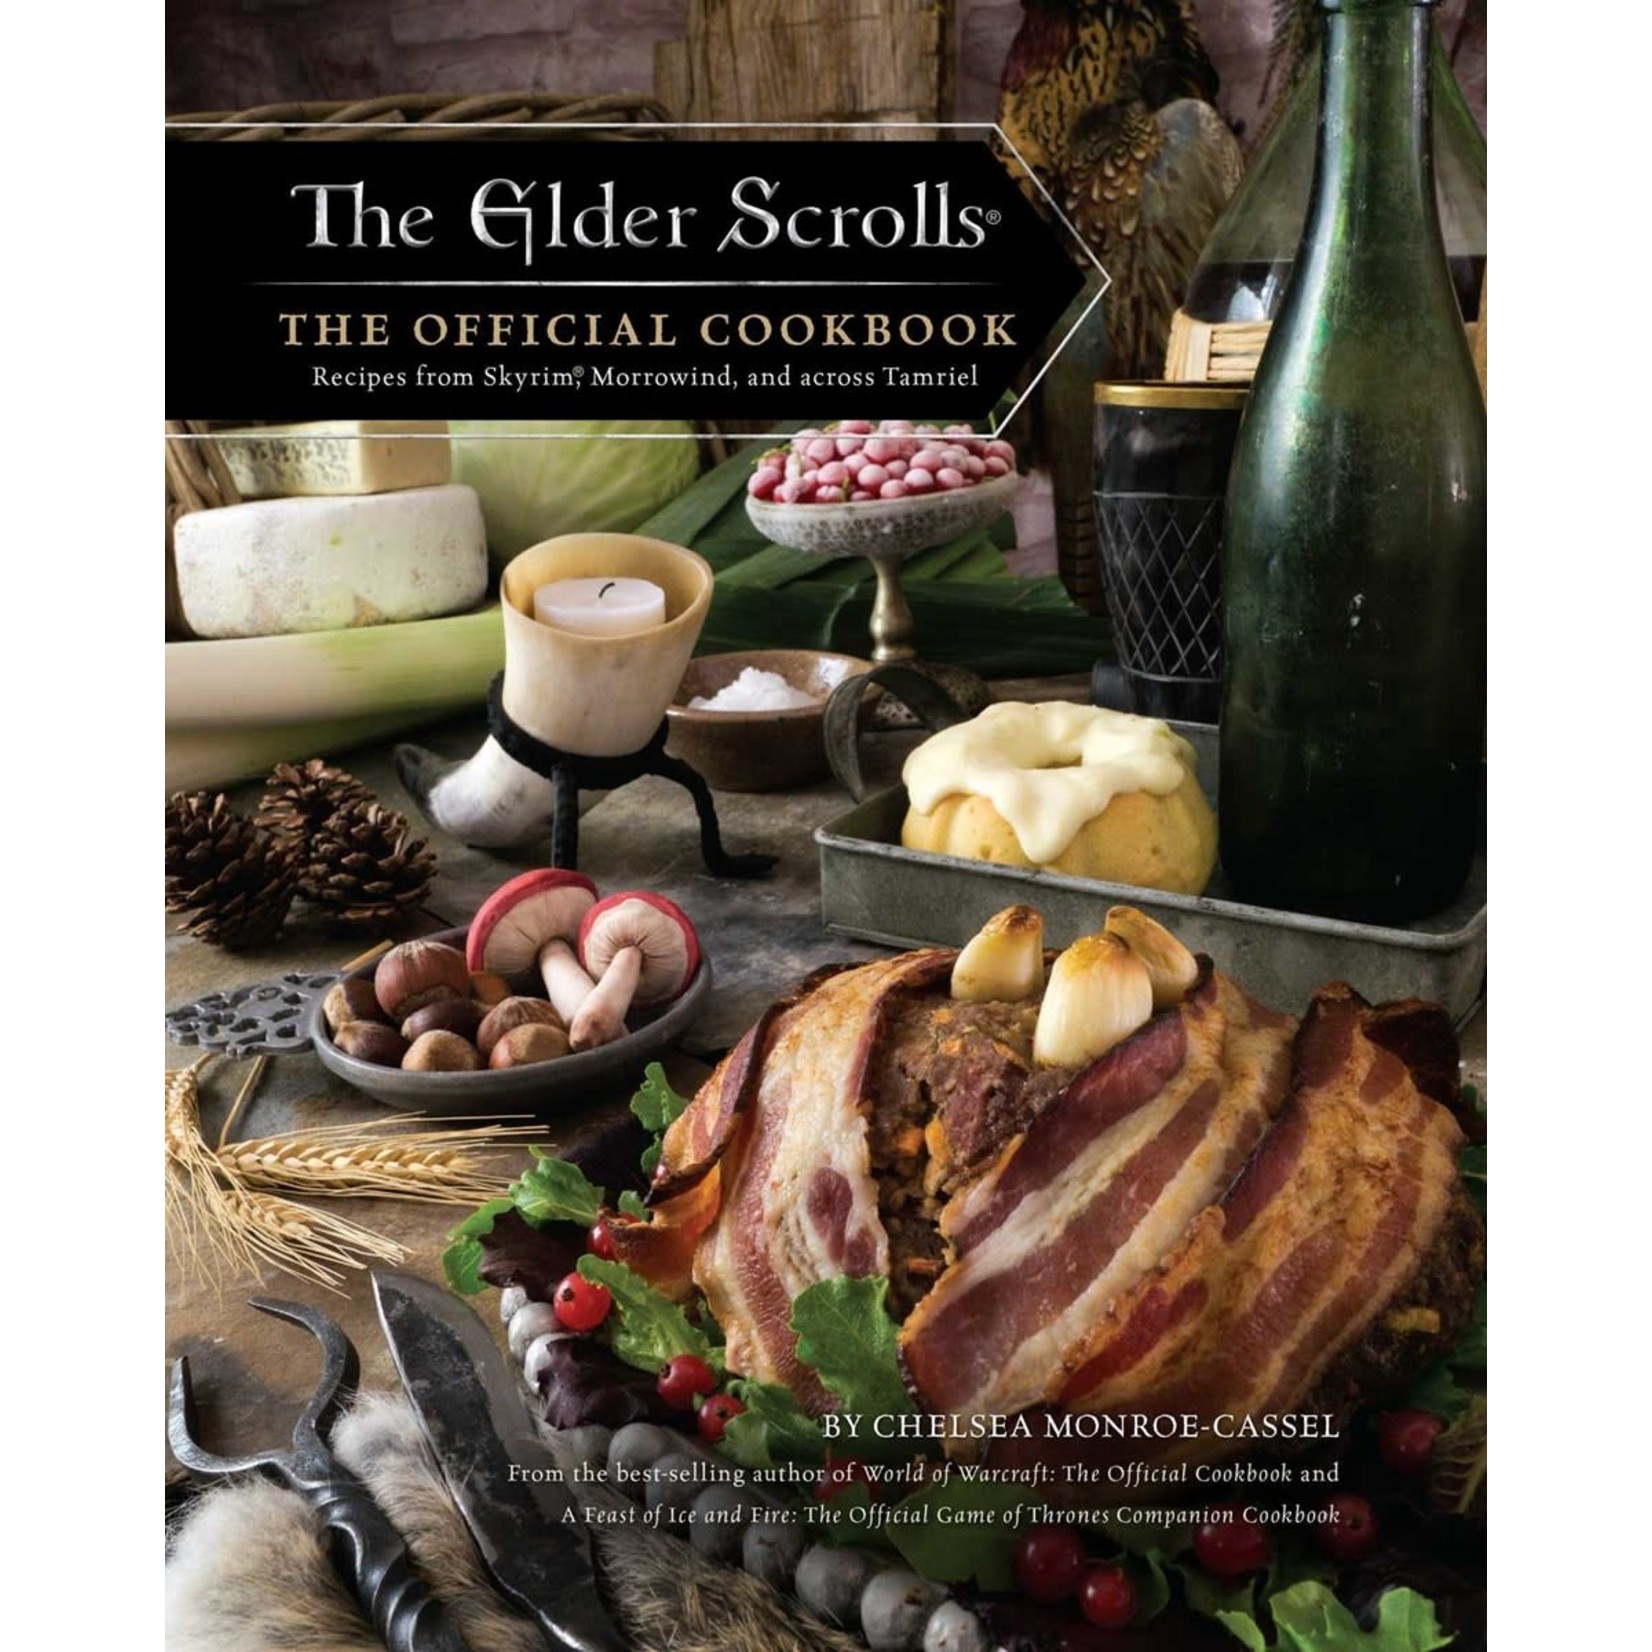 The Elder Scrolls Official Cookbook